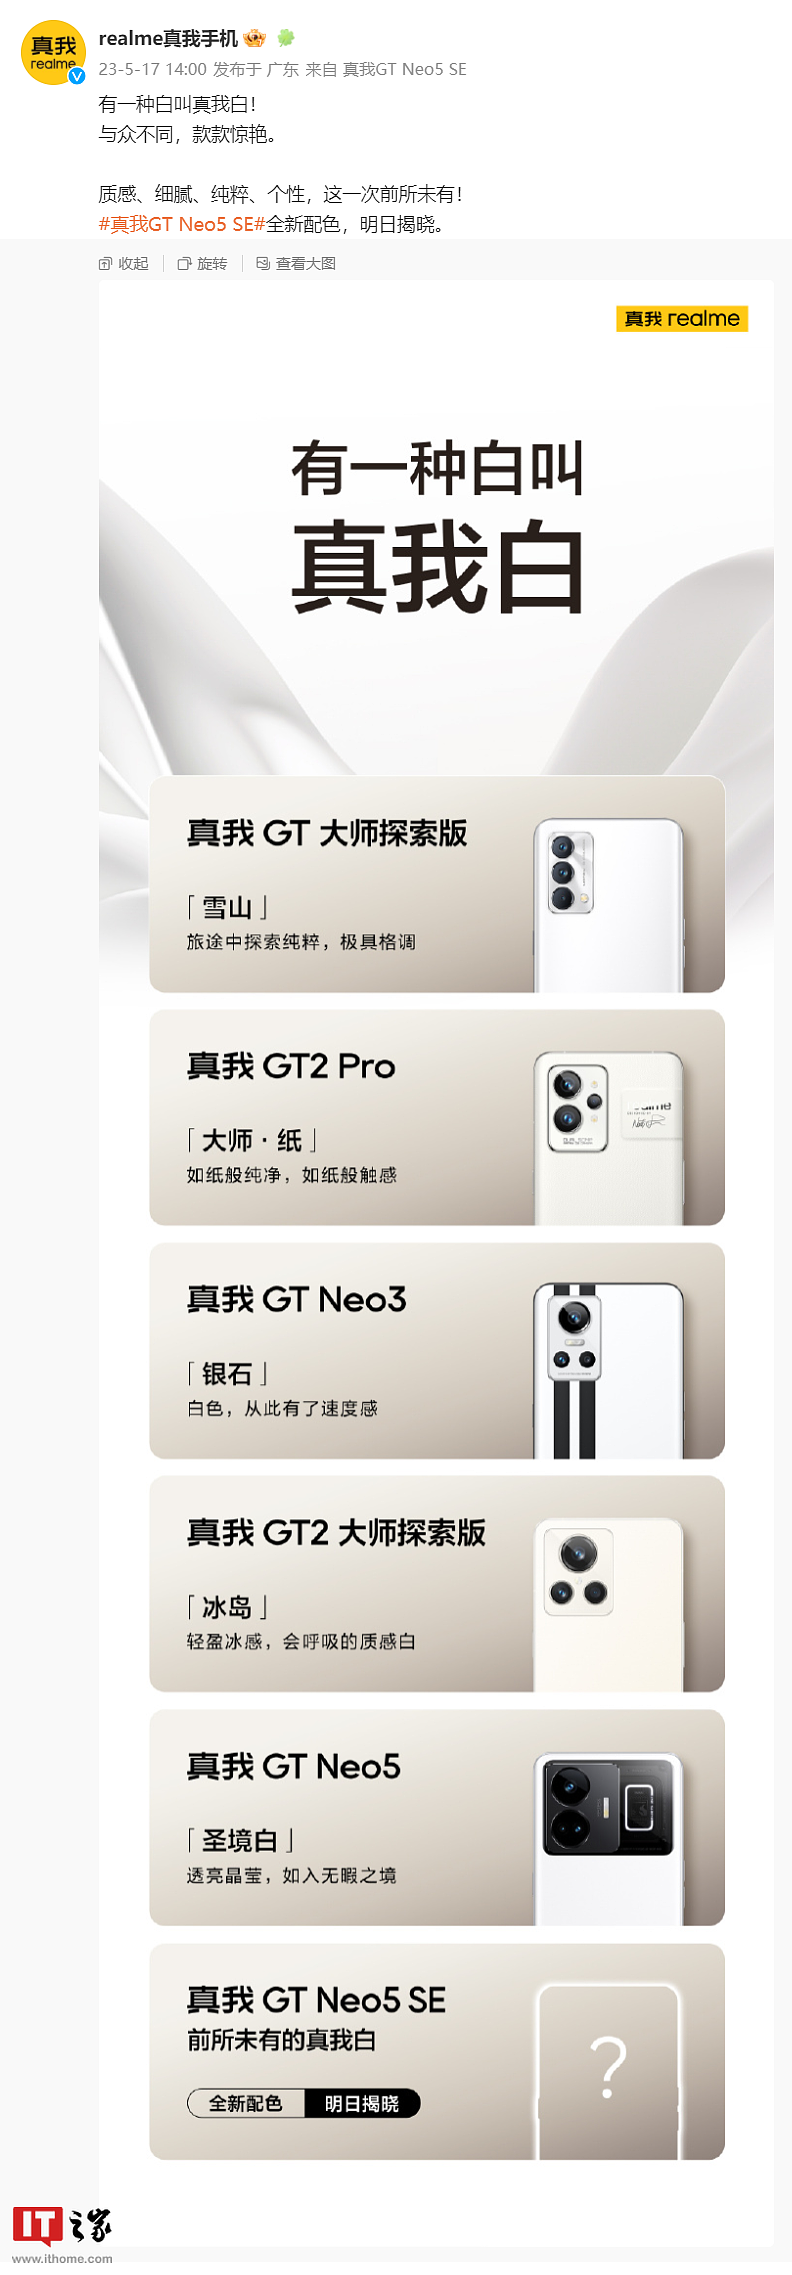 realme GT Neo5 SE 手机全新配色明日揭晓：“前所未有的真我白” - 1